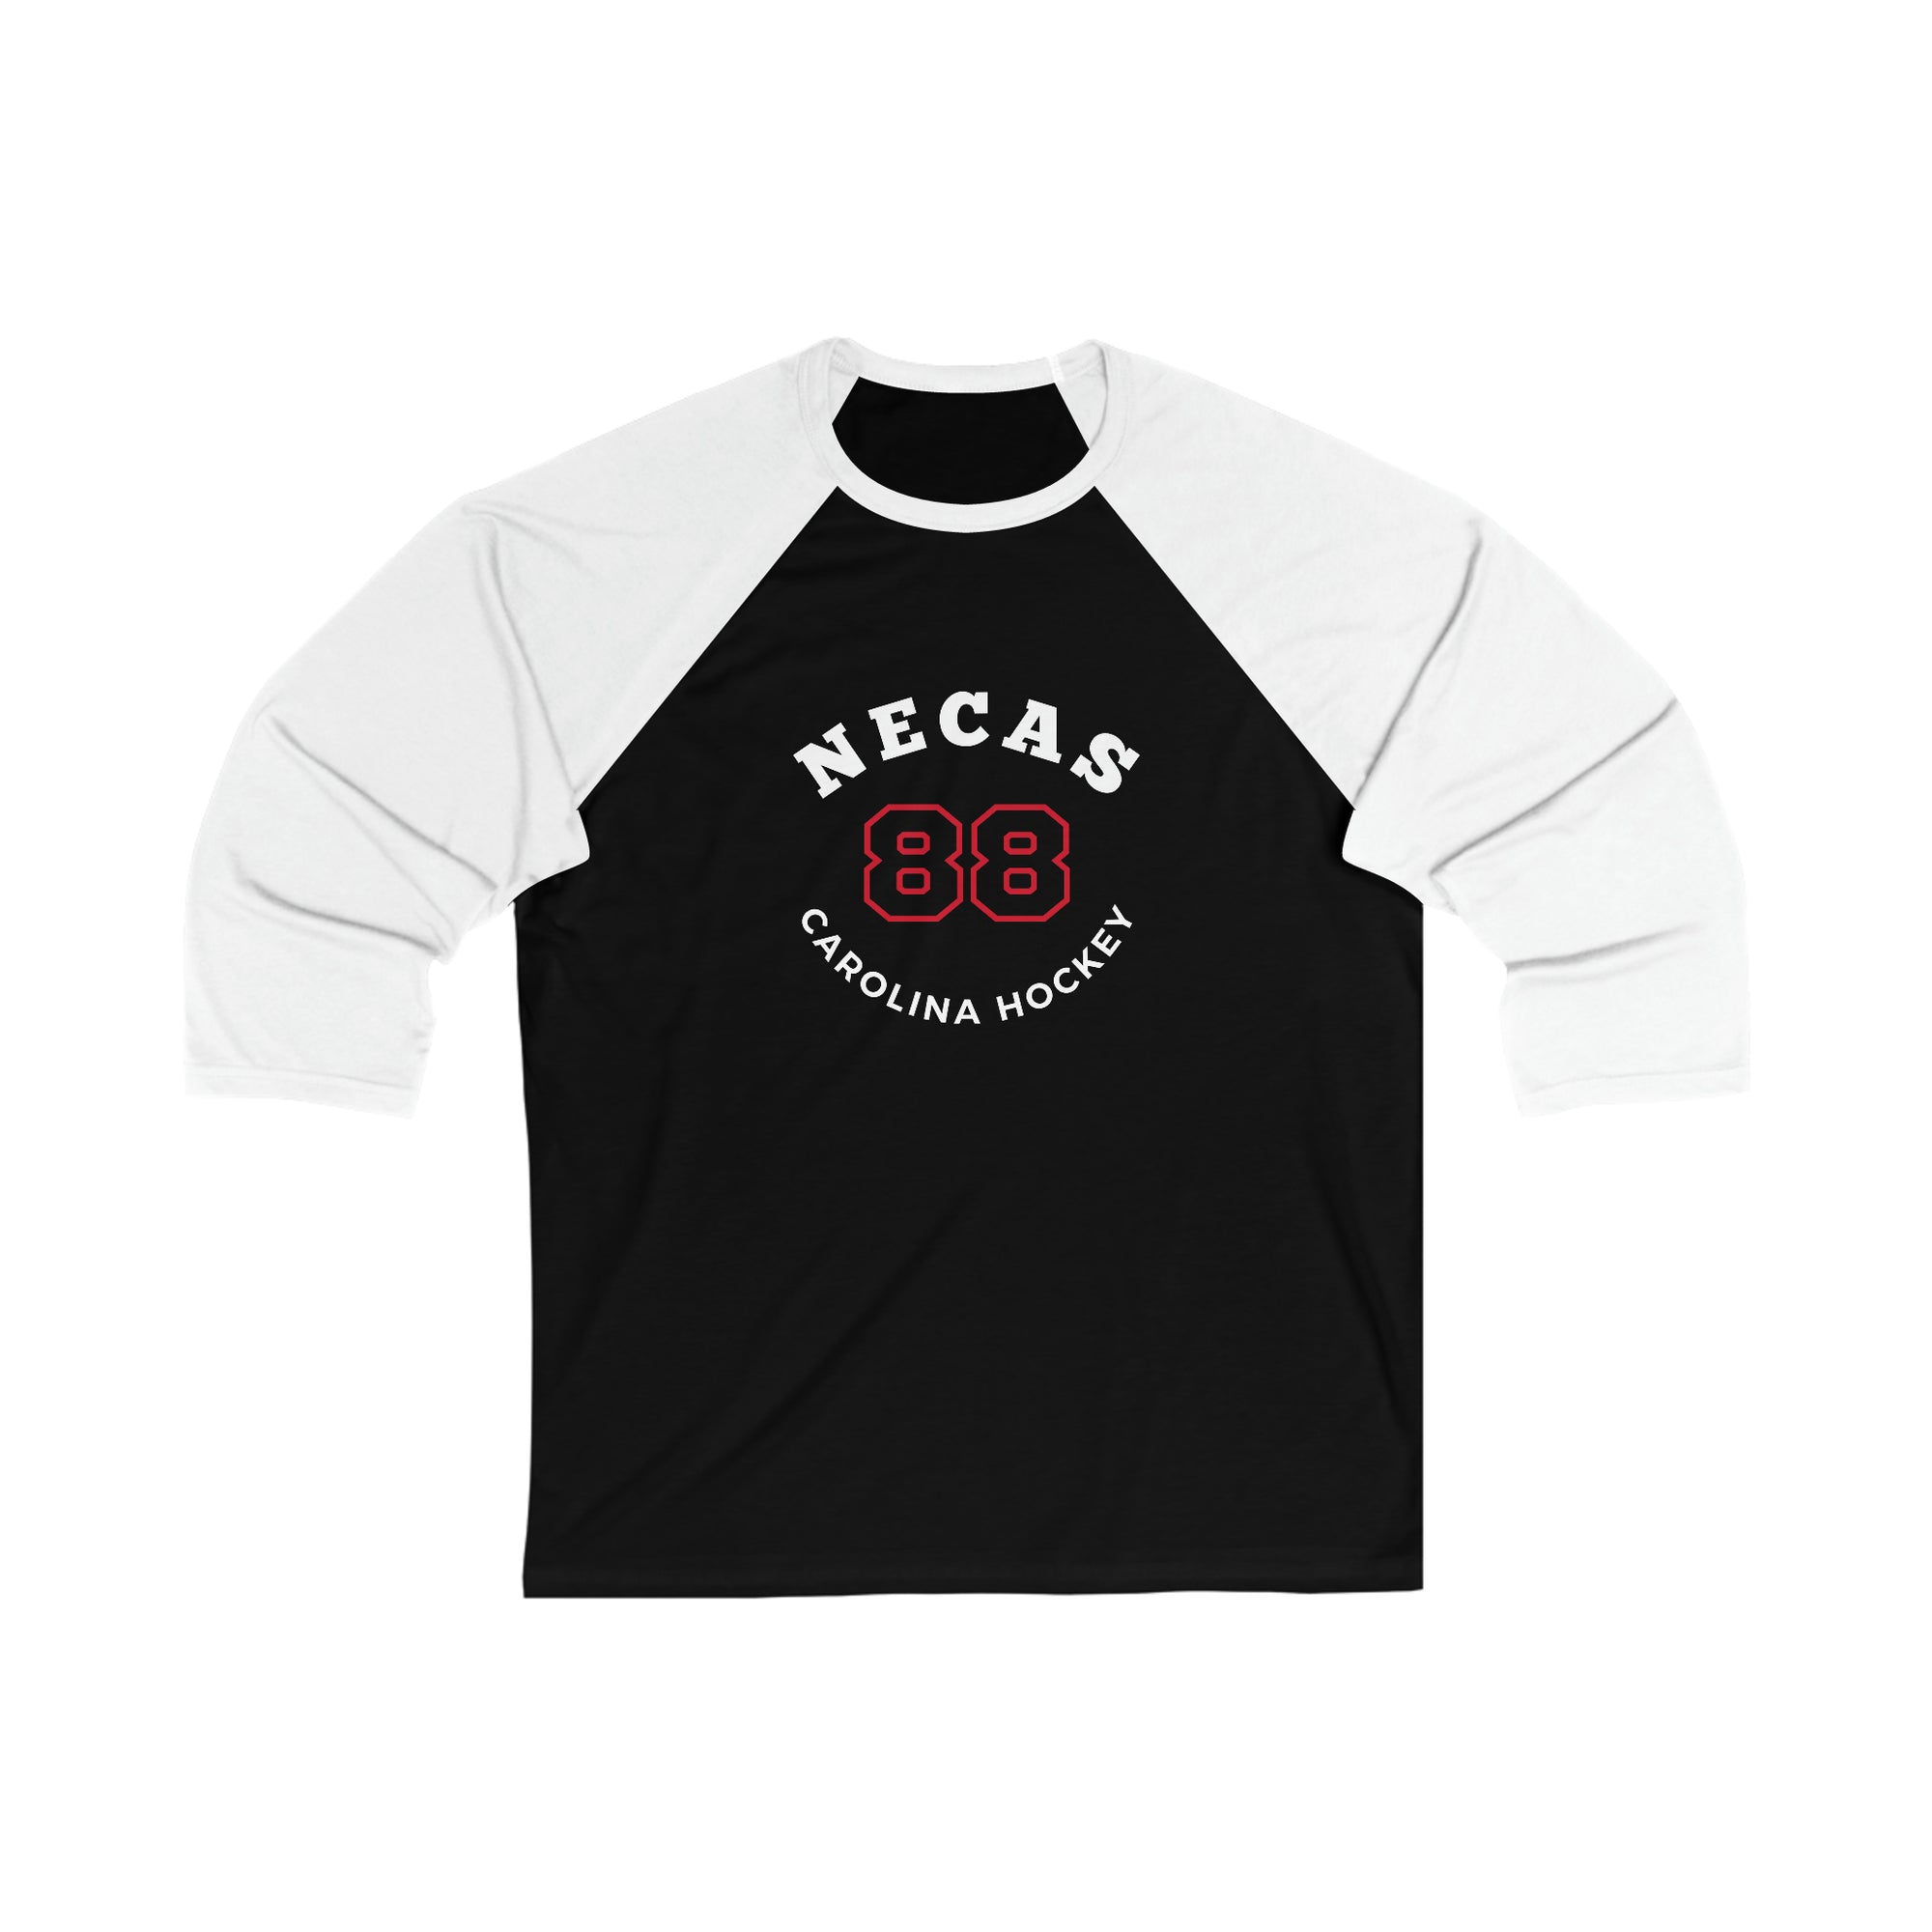 Necas 88 Carolina Hockey Number Arch Design Unisex Tri-Blend 3/4 Sleeve Raglan Baseball Shirt